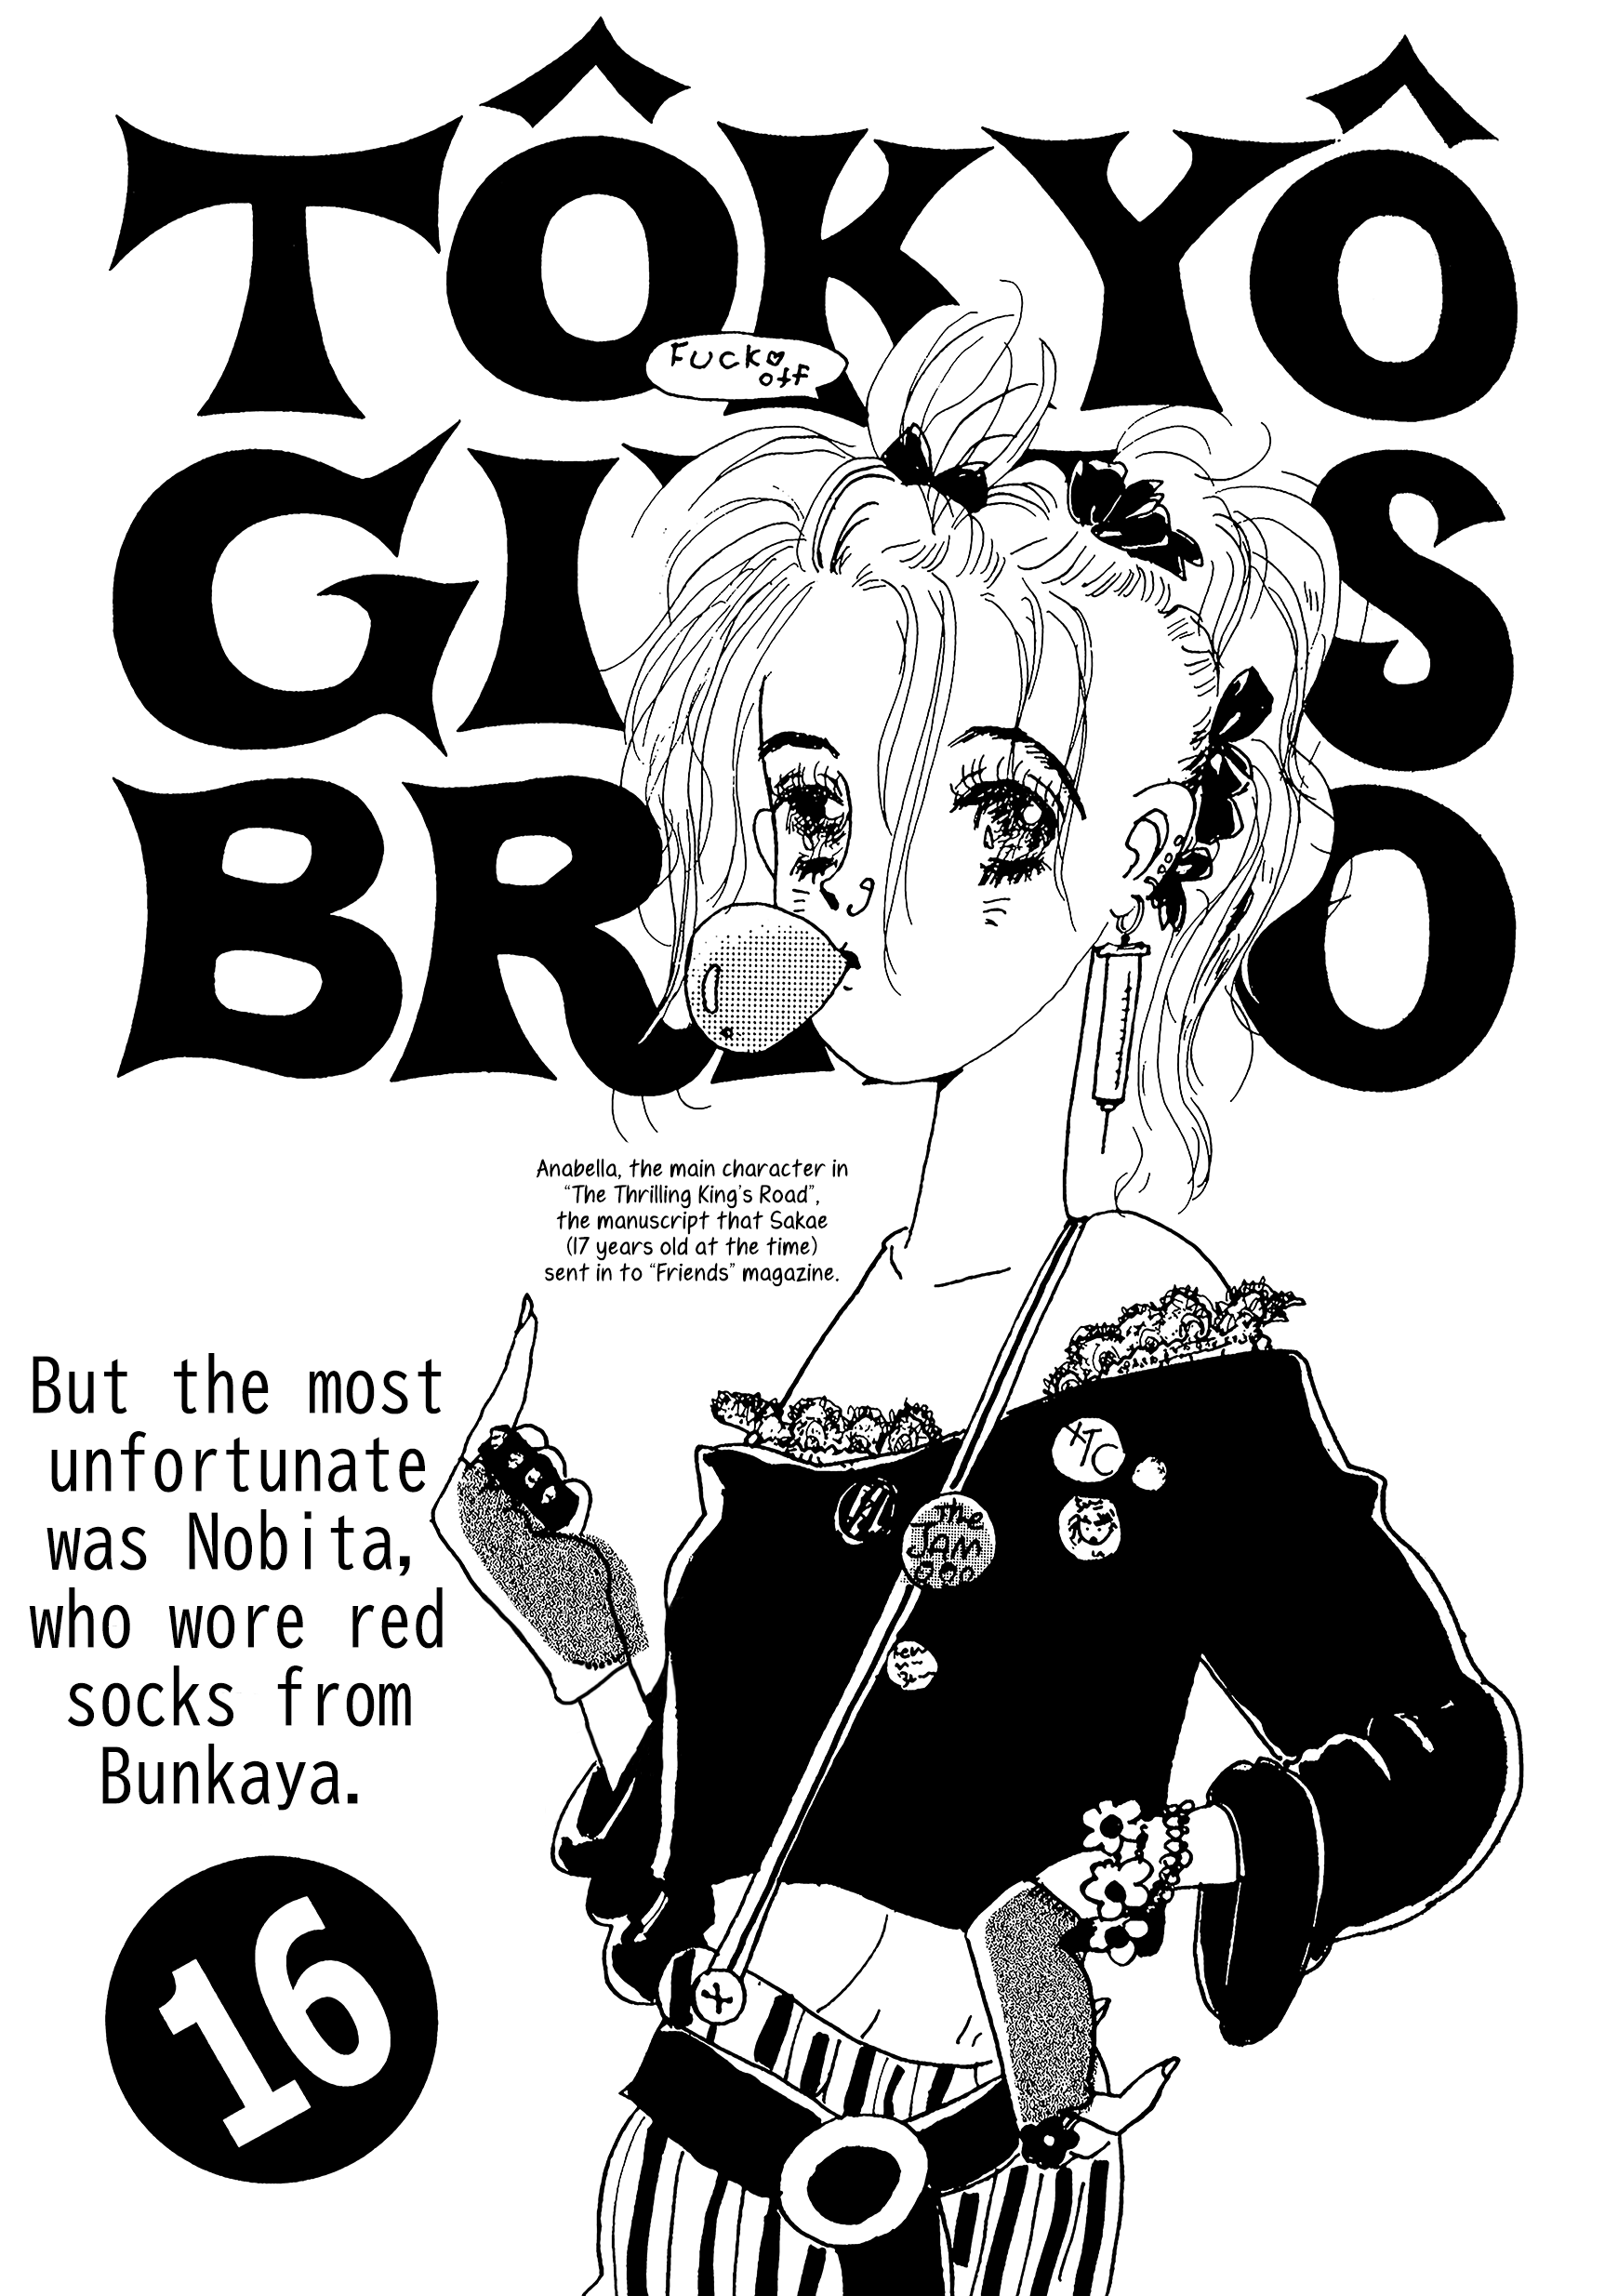 Tokyo Girls Bravo - Page 1